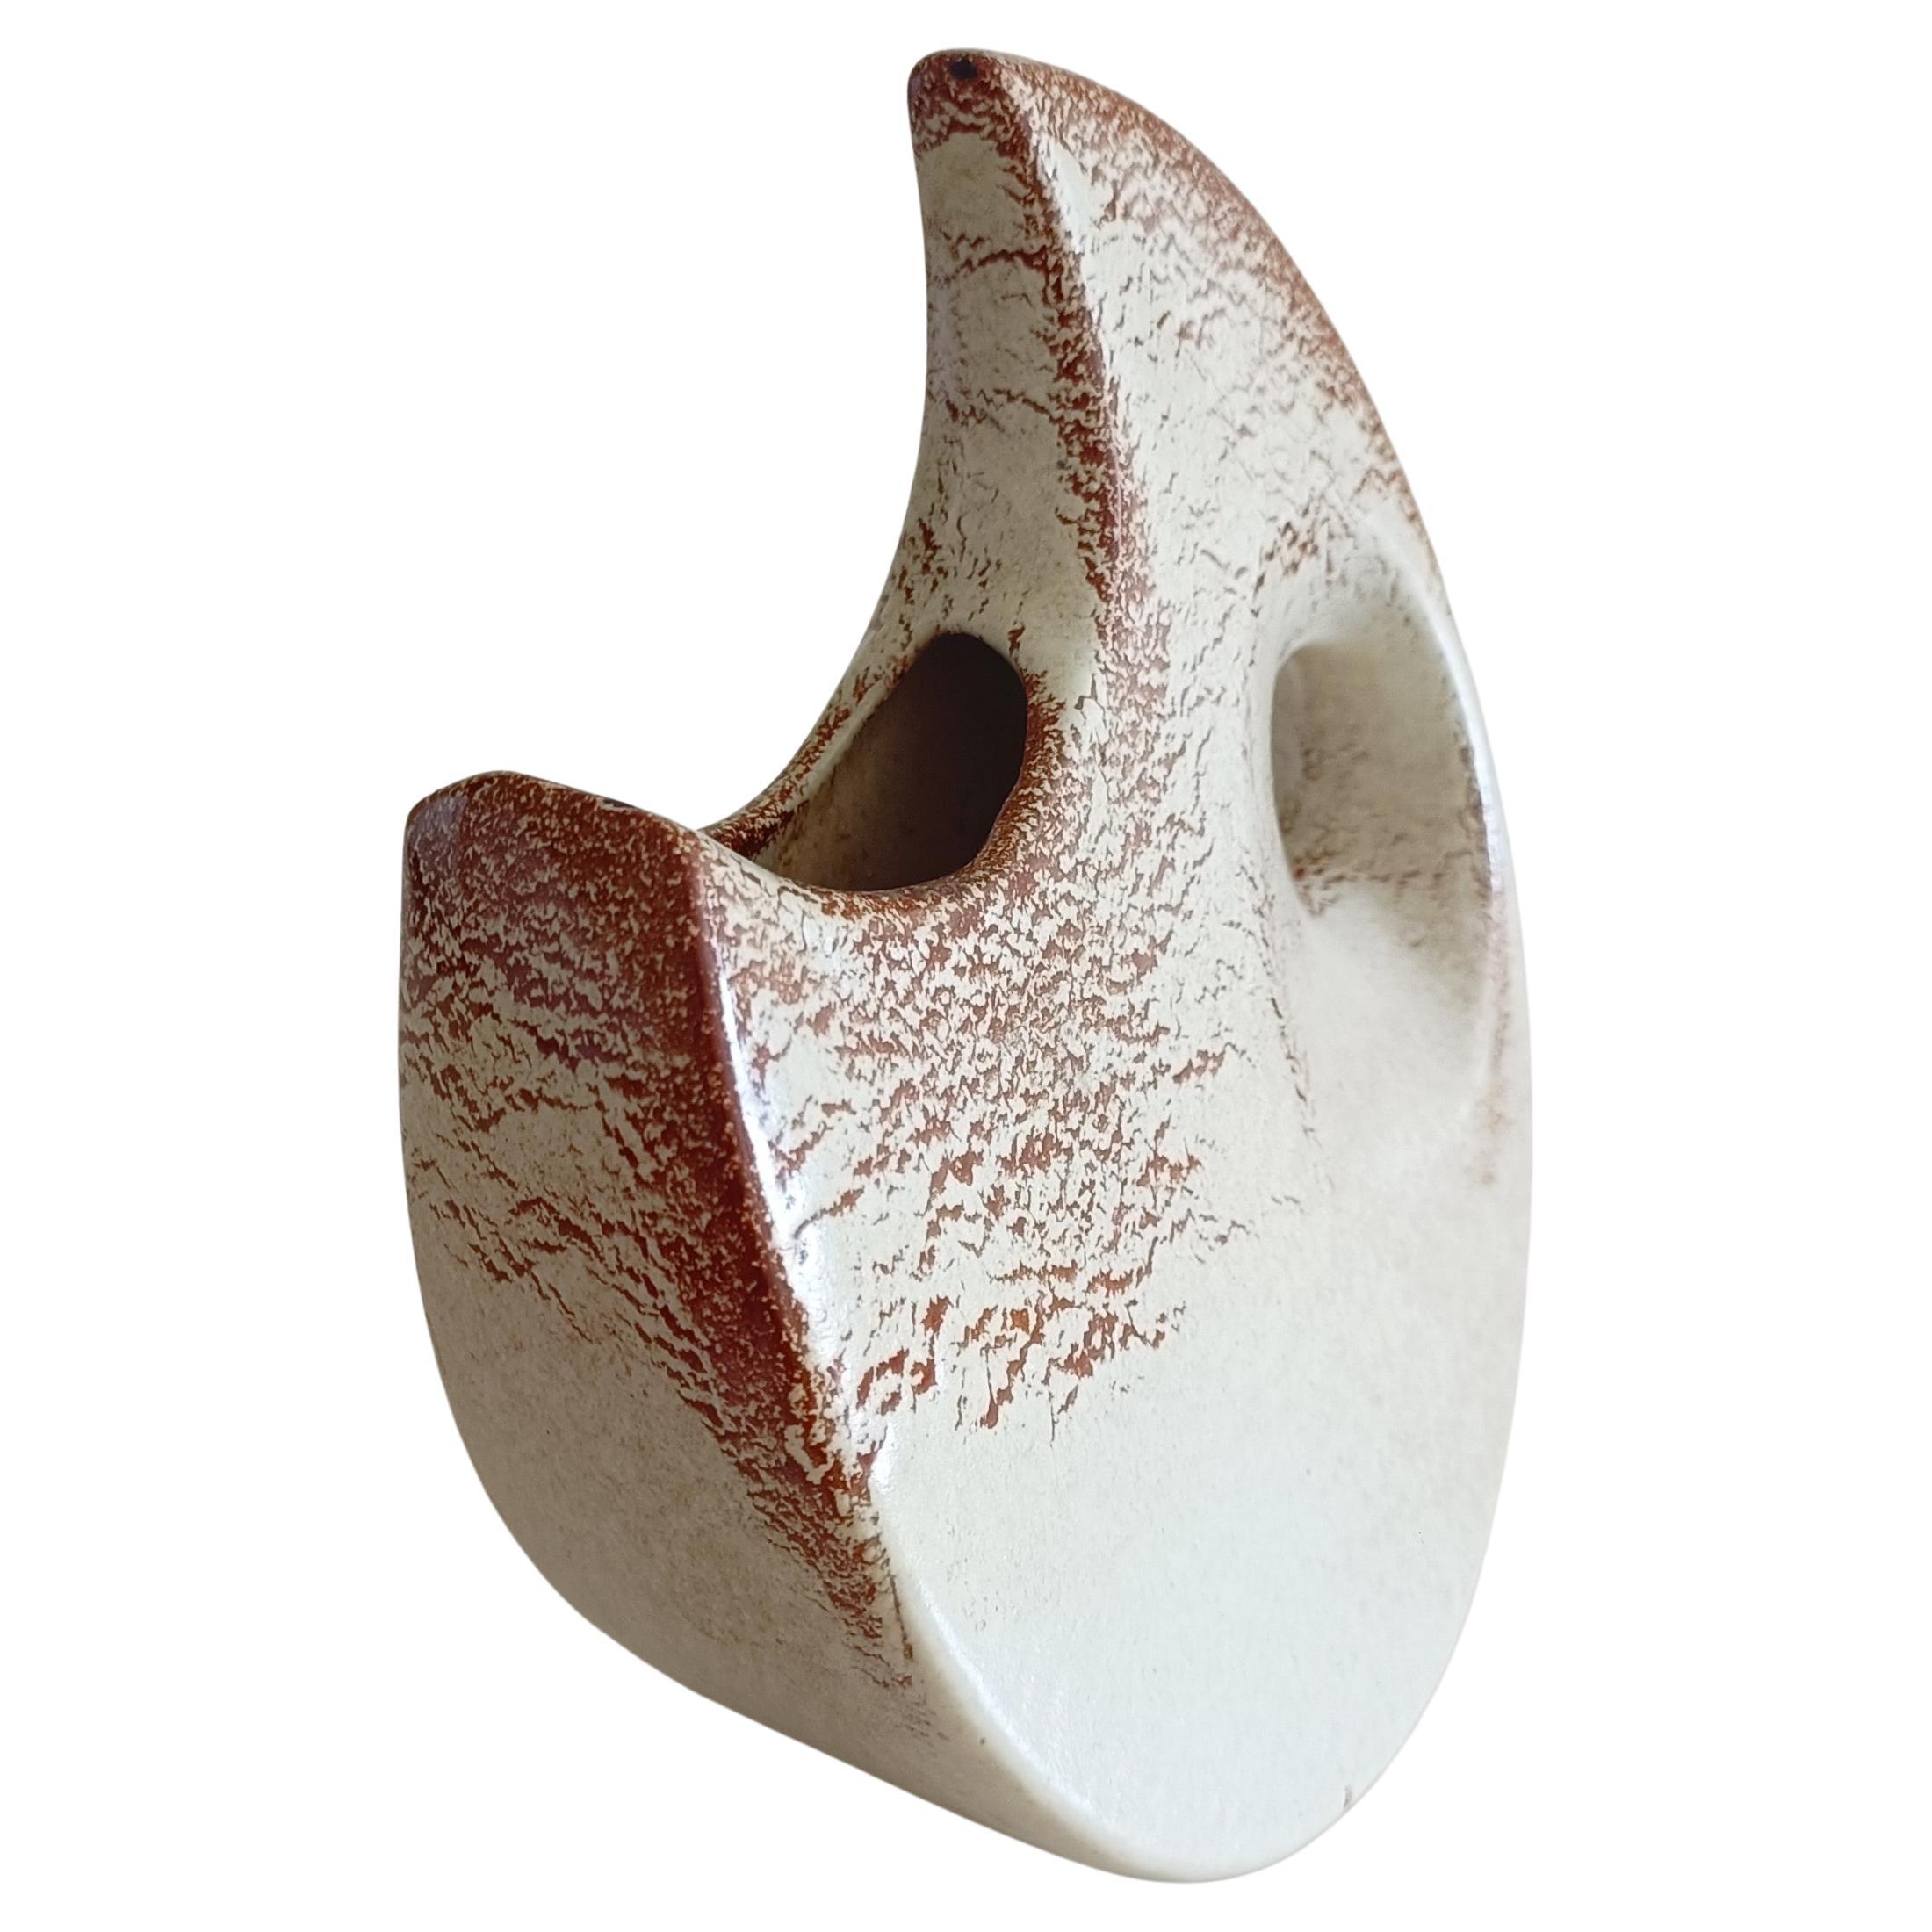 Vintage Bertoncello by Roberto Rigon Moon Shape Ceramic Pitcher, Italy, 1960s For Sale 3